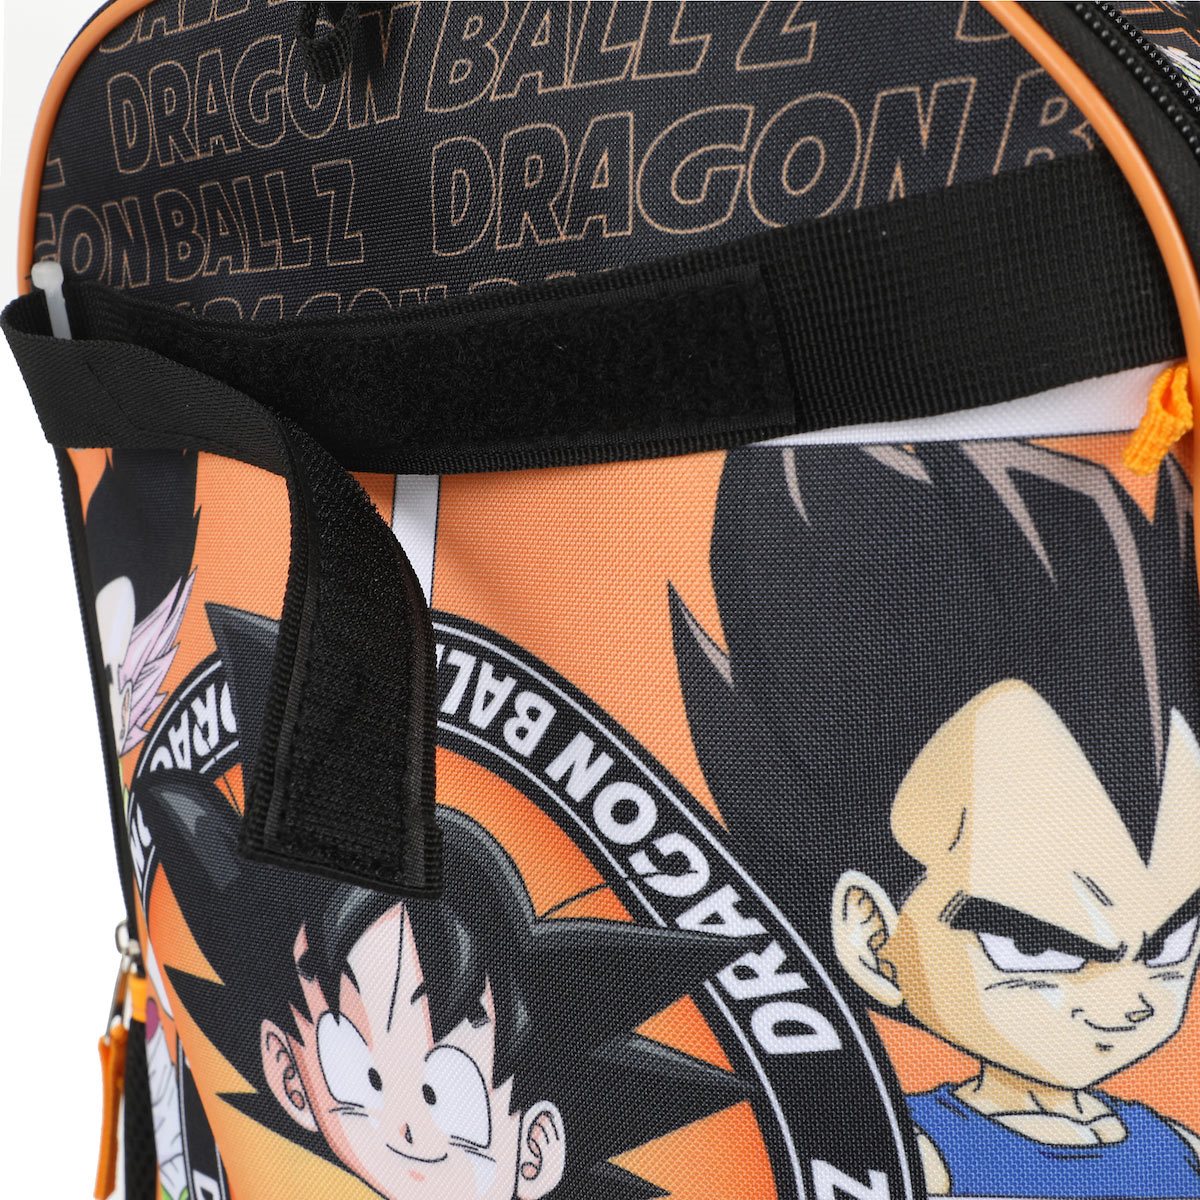 Dragon Ball Z 5-Piece Backpack Set